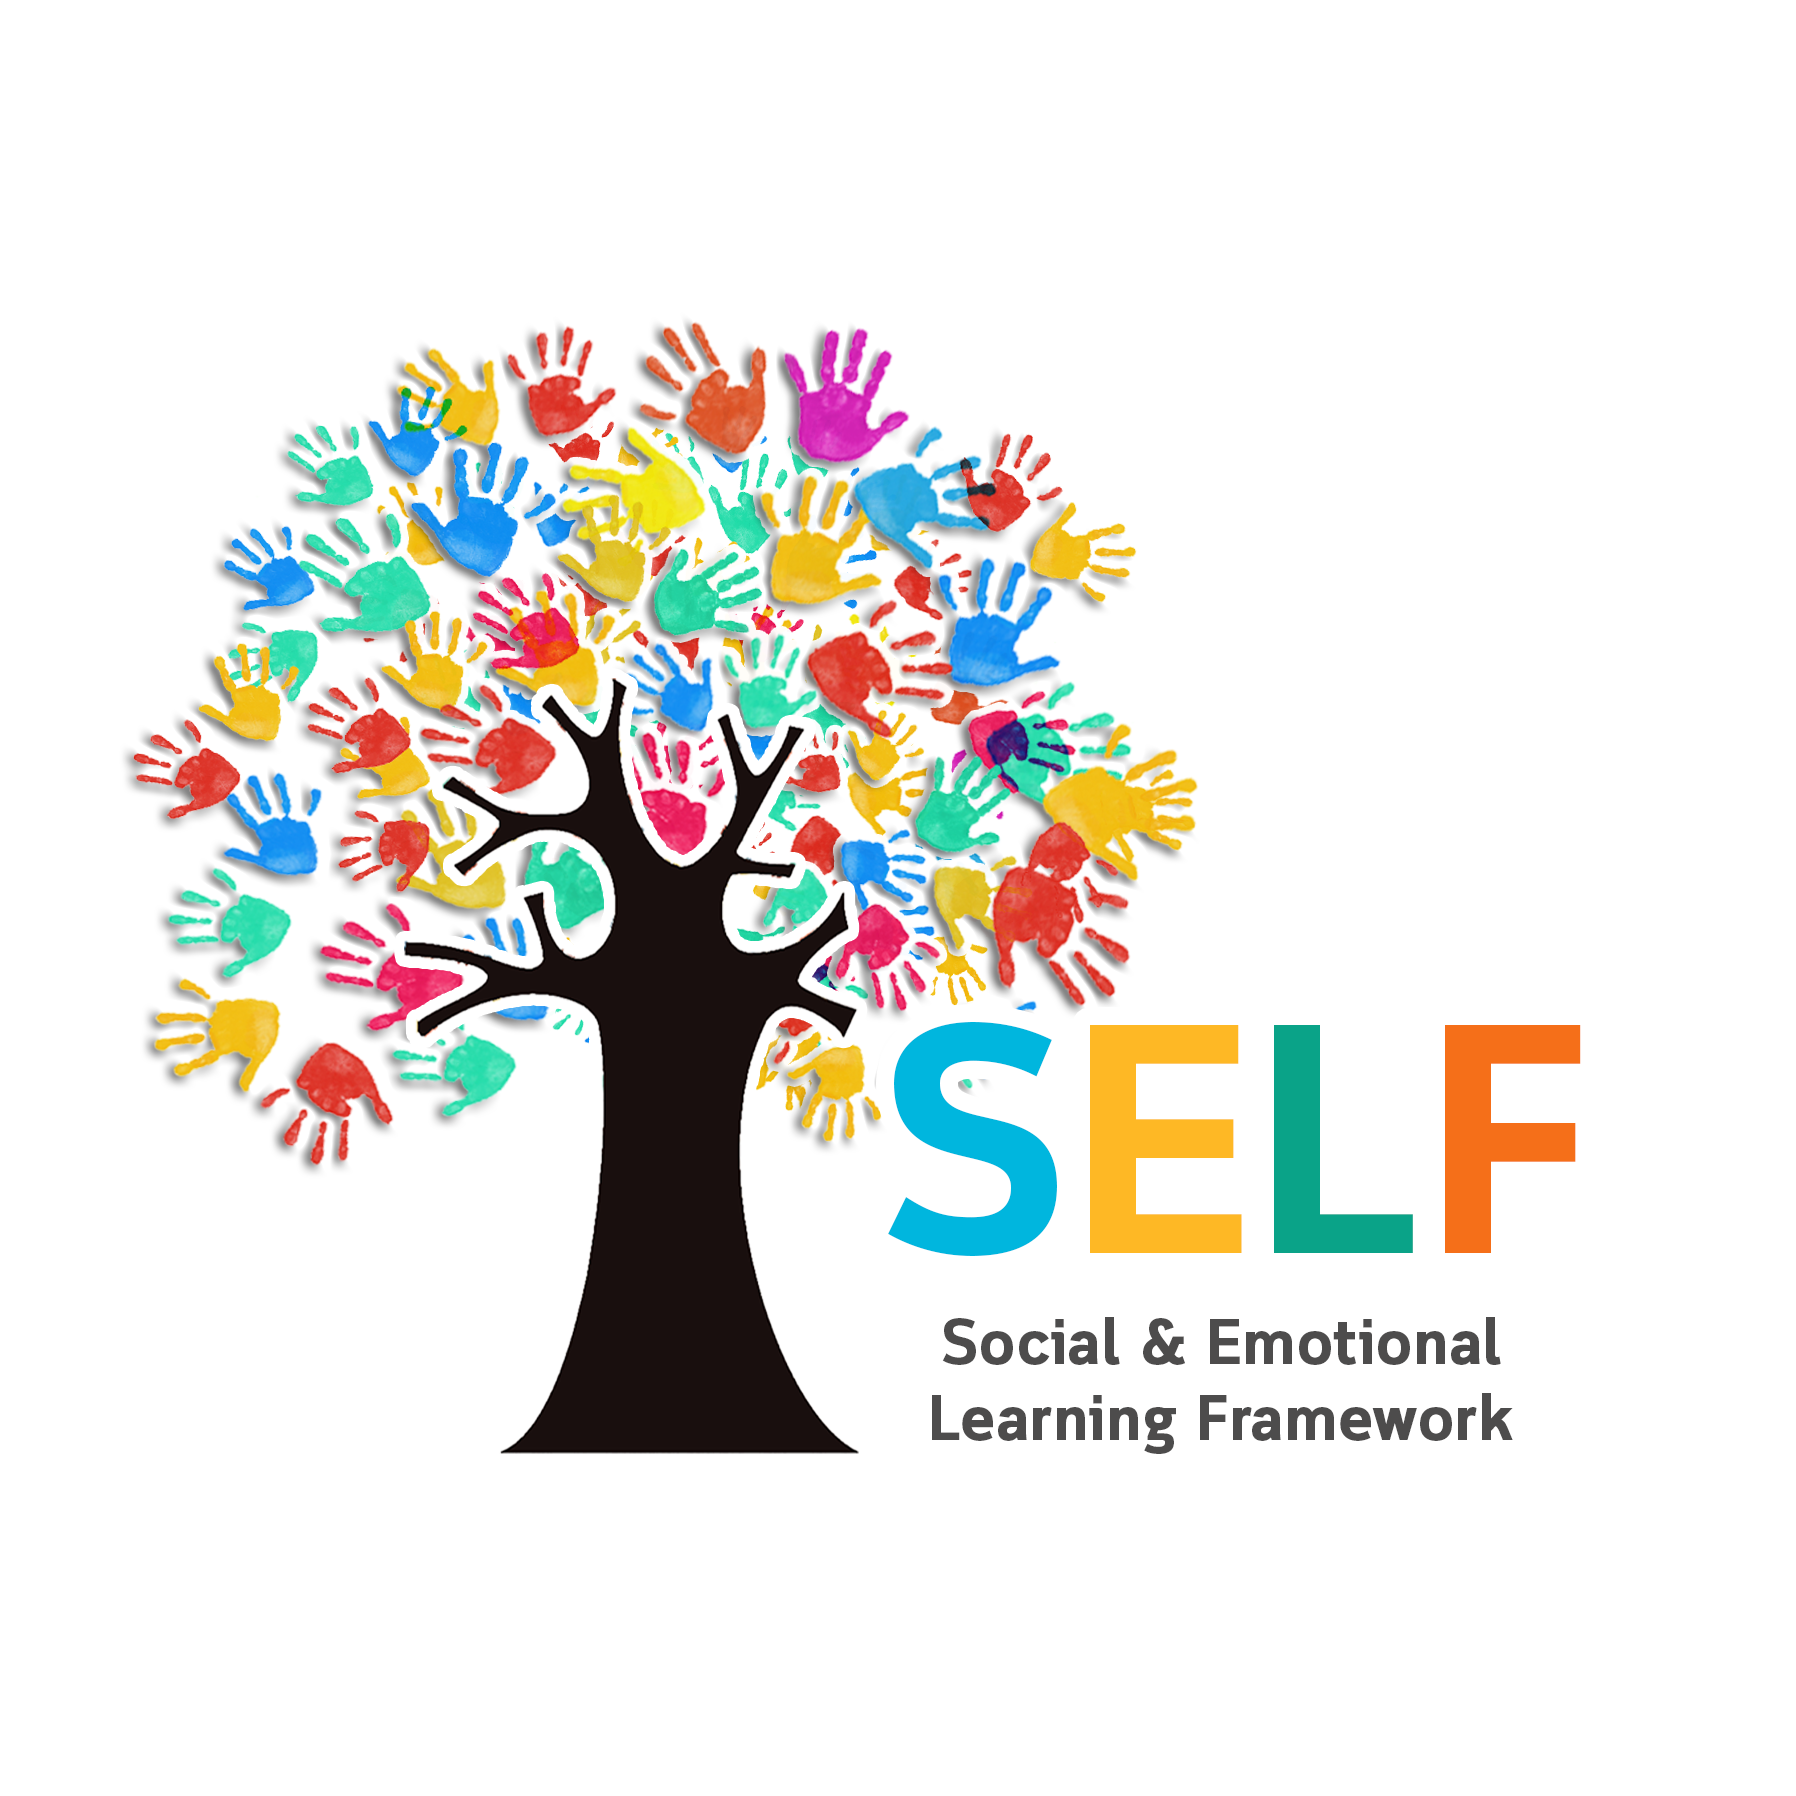 SOCIAL & EMOTIONAL LEARNING FRAMEWORK